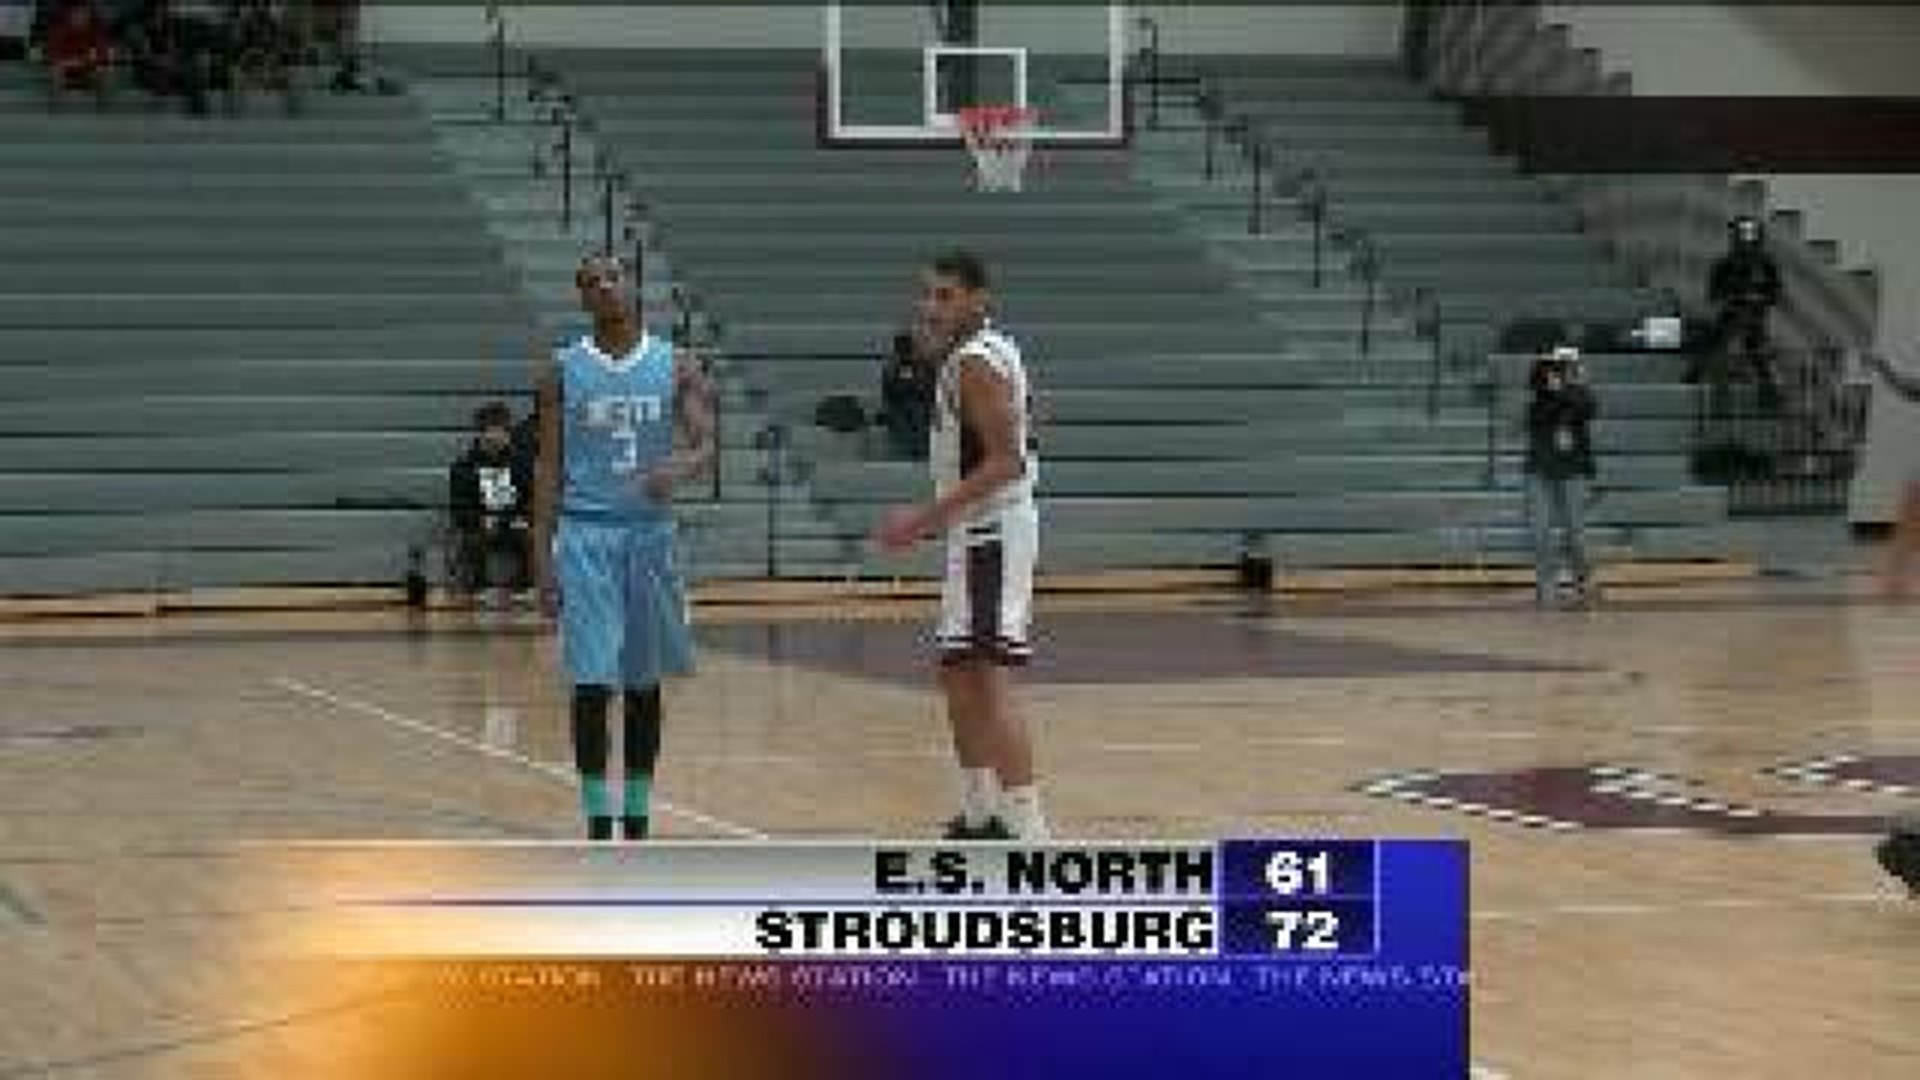 Stroudsburg vs East Stroudsburg North